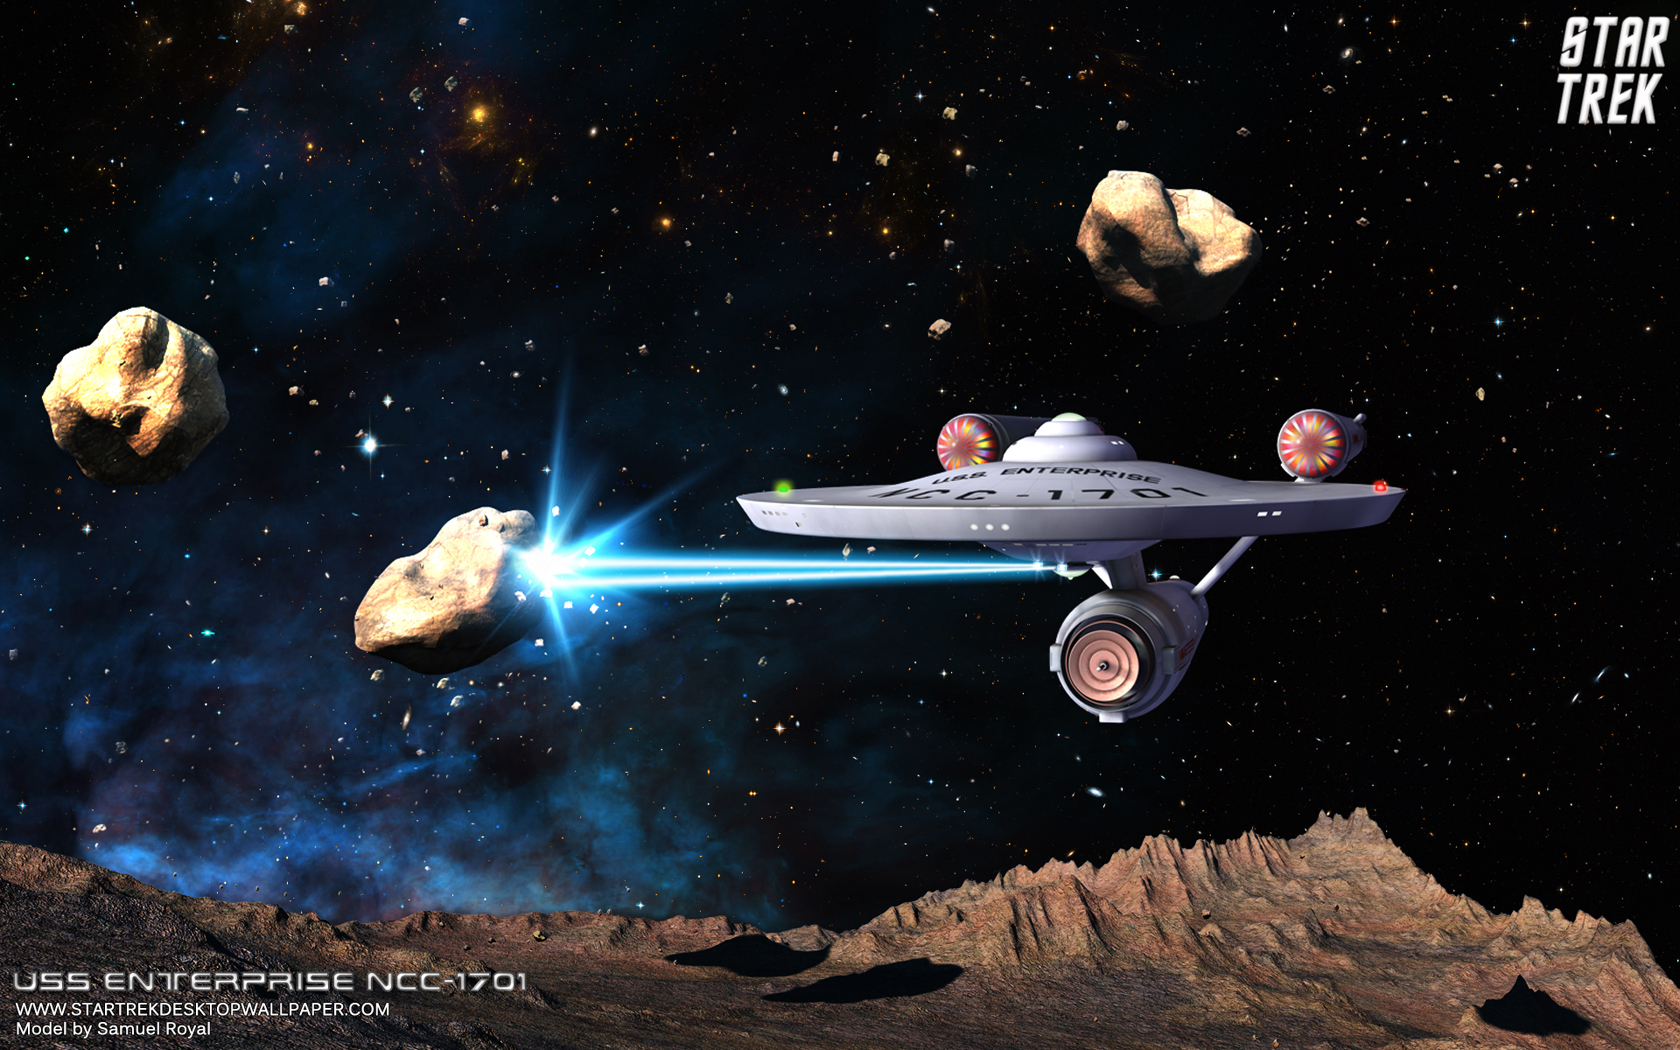 - Star Trek Enterprise NCC1701 In Asteroid Field - free Star Trek computer desktop wallpaper, pictures, images.